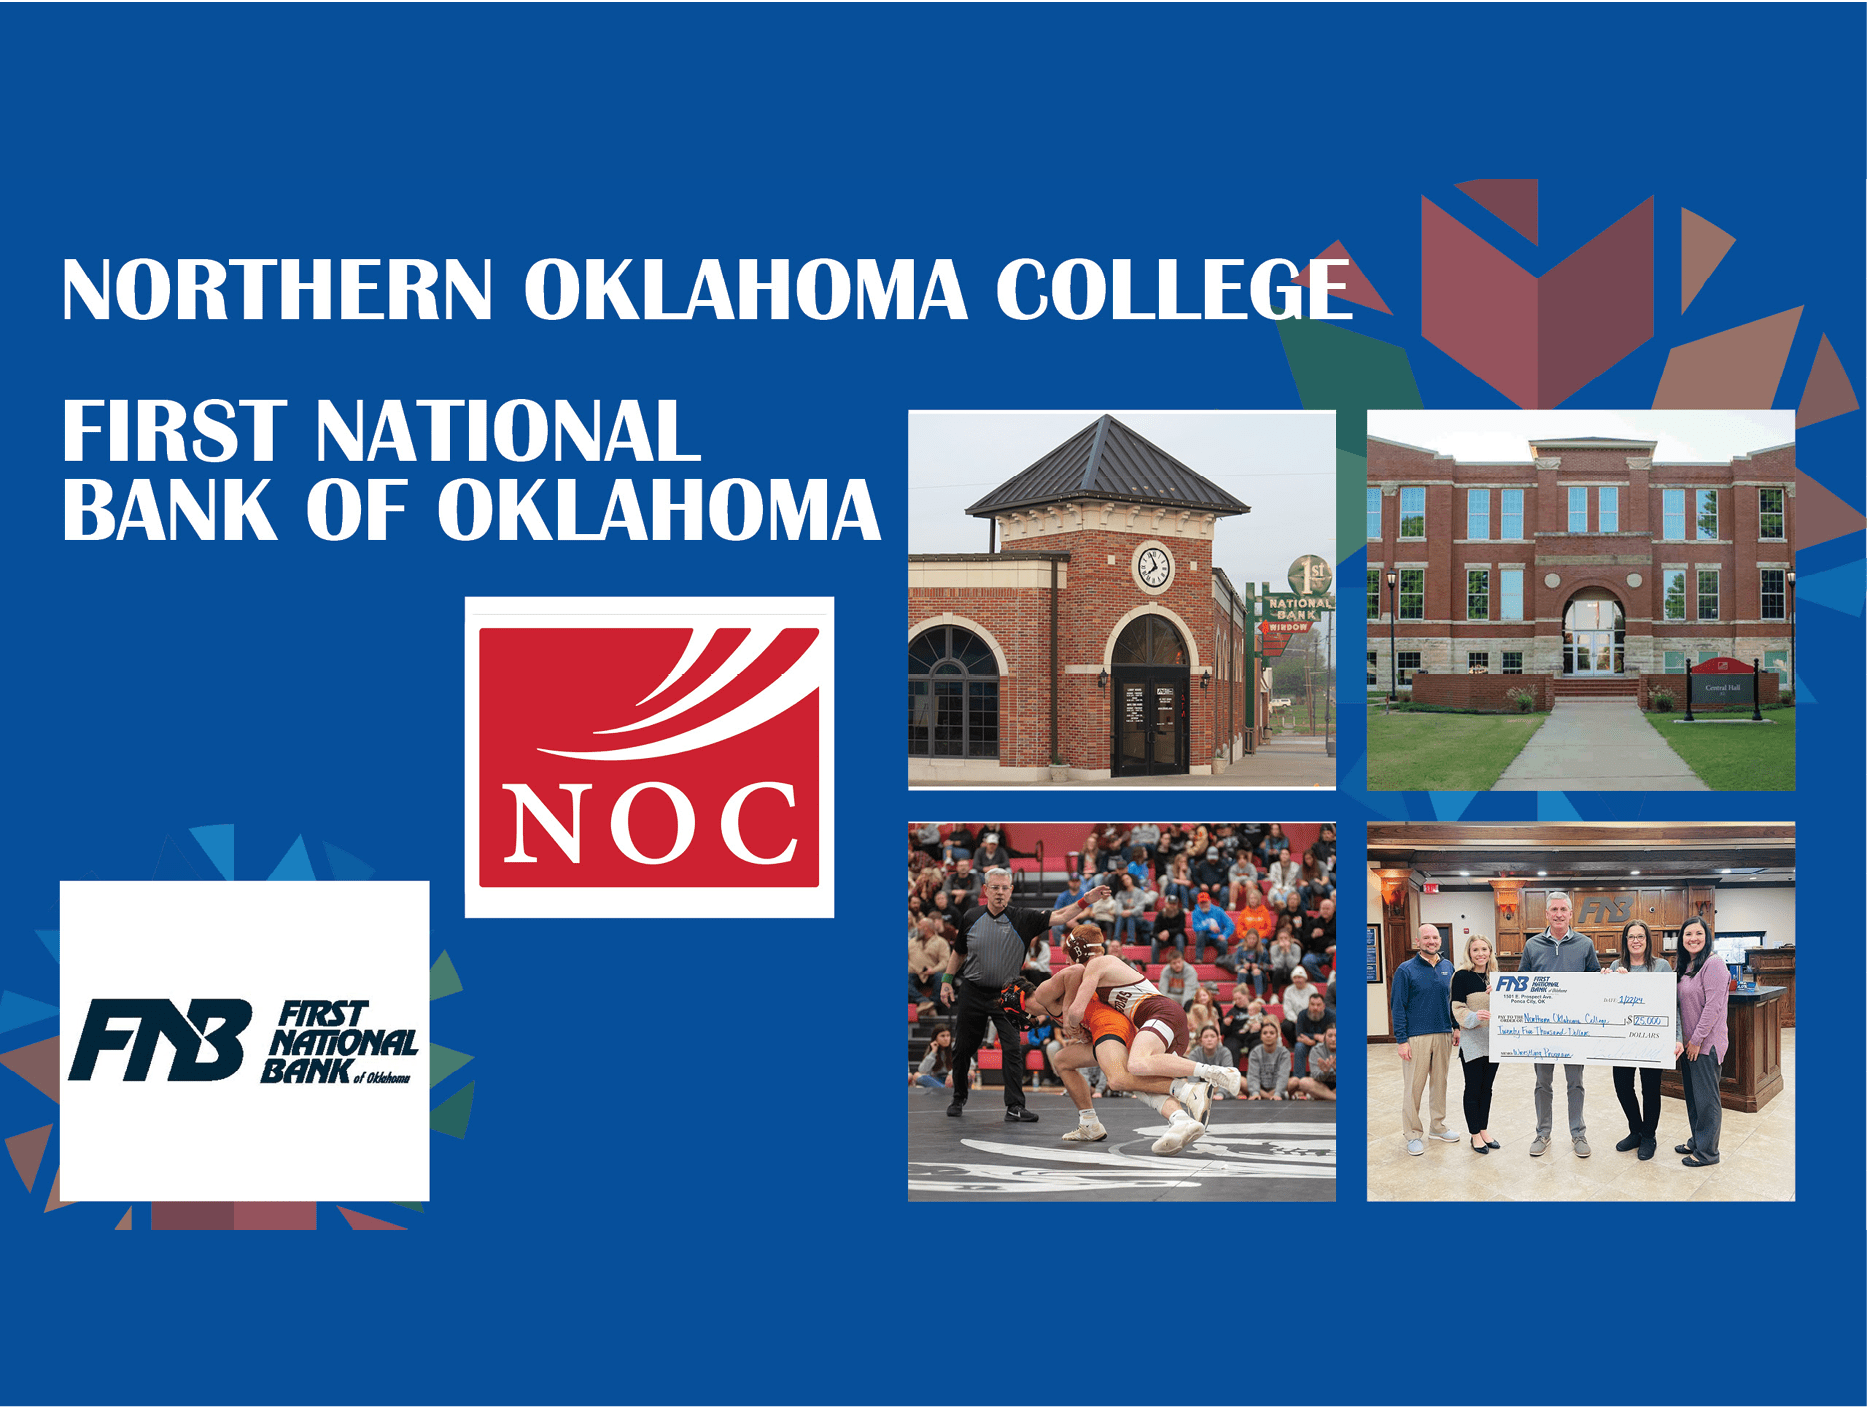 Northern Oklahoma College and First National Bank of Oklahoma